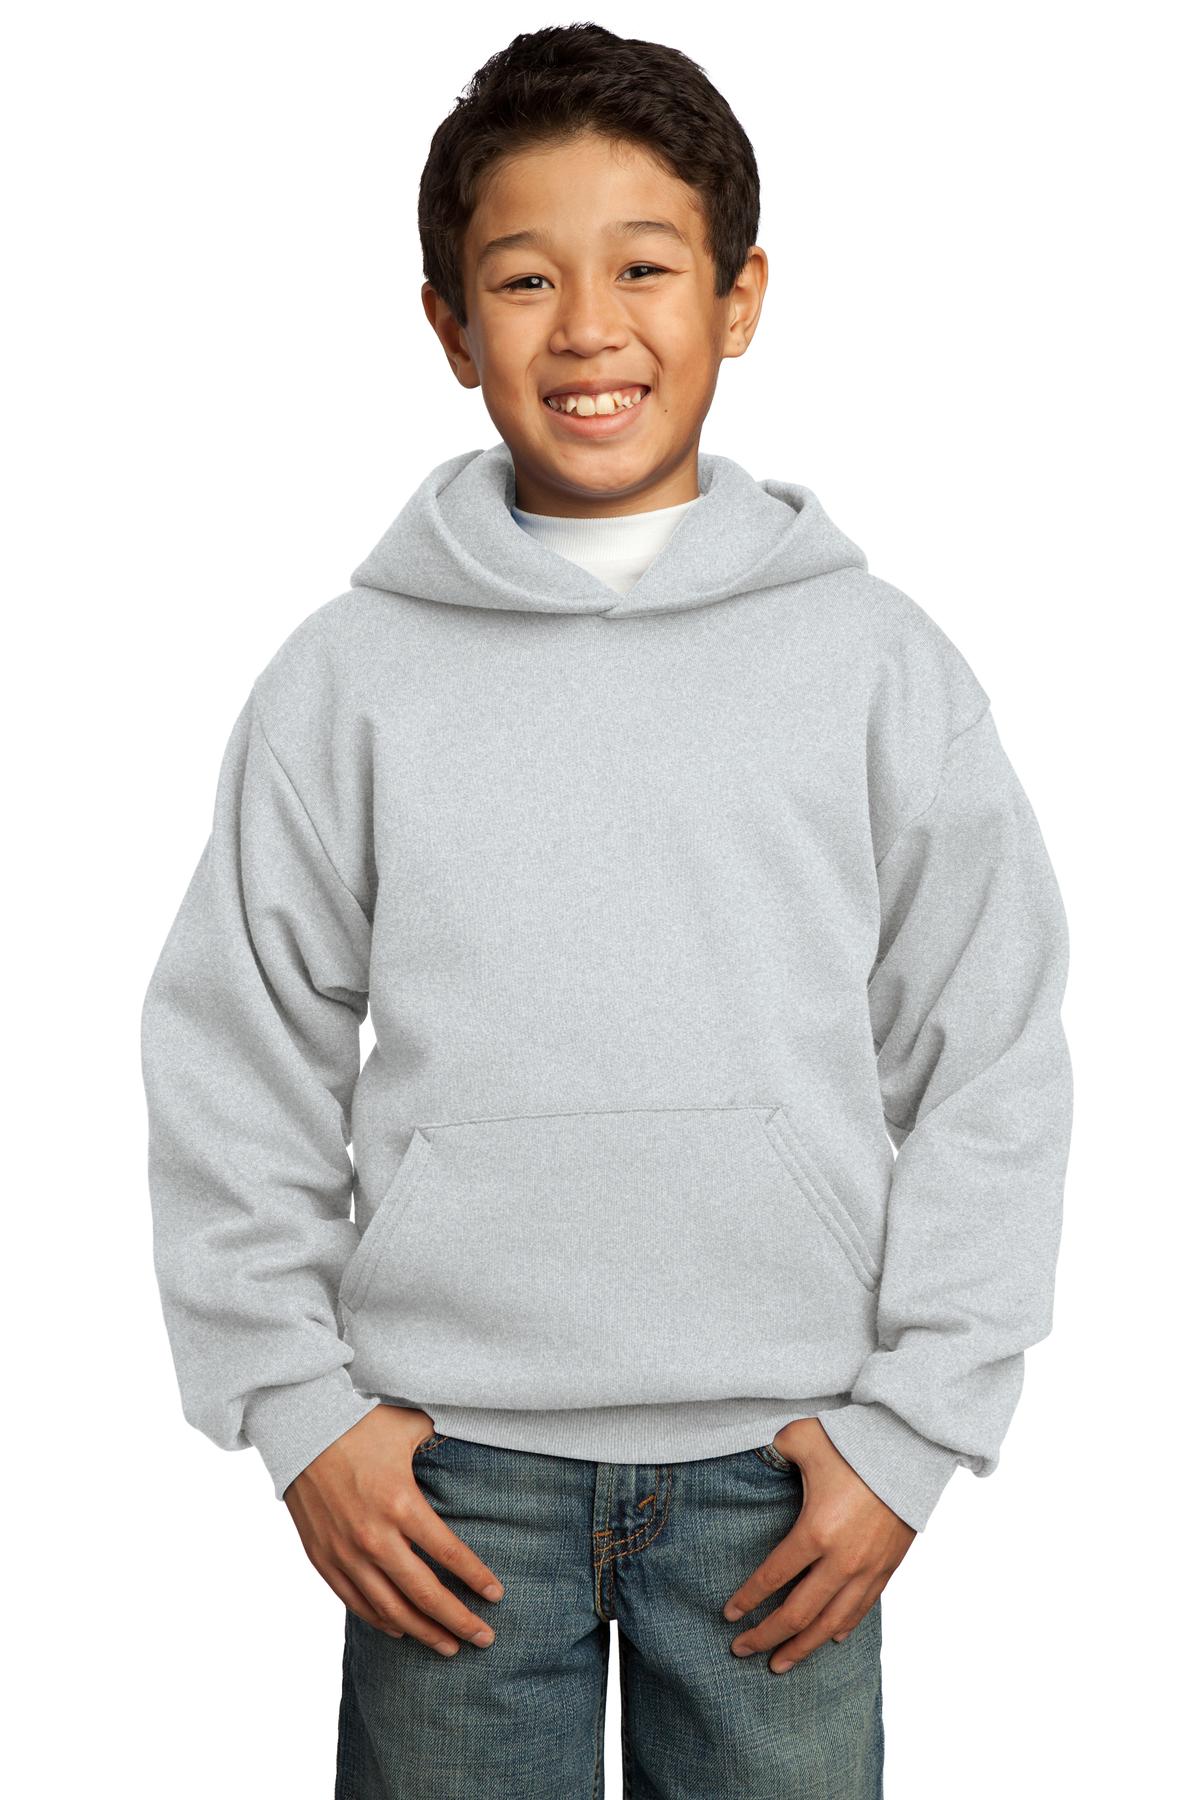 Port & Company - Youth Core Fleece Pullover Hooded Sweatshirt - PC90YH